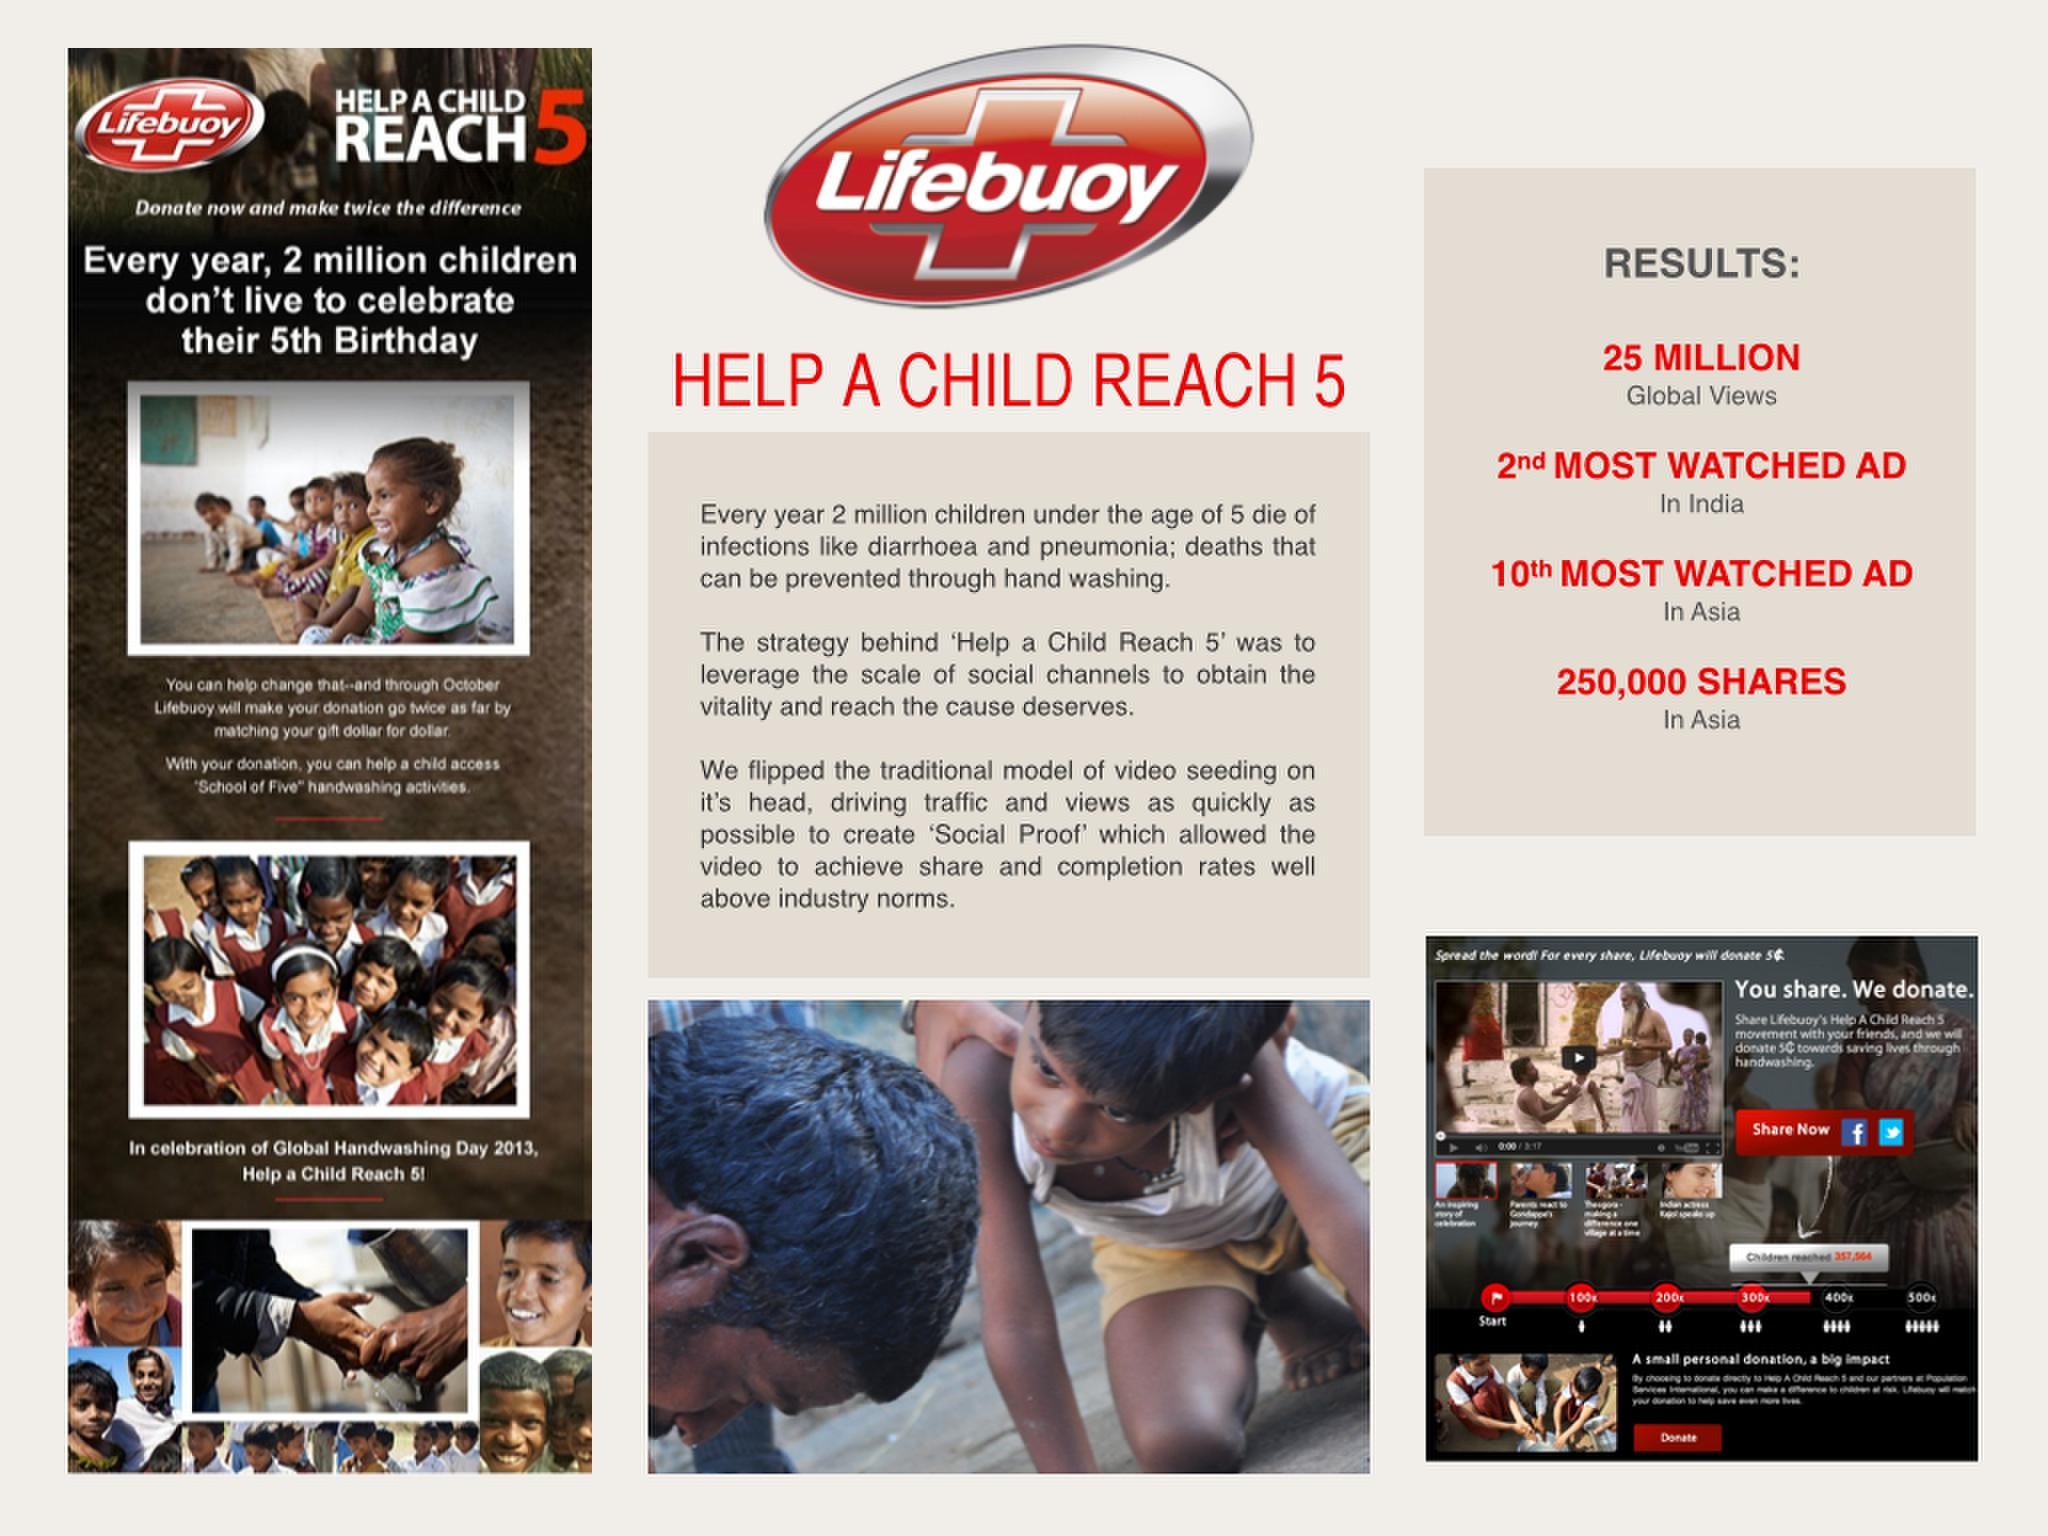 HELP A CHILD REACH 5